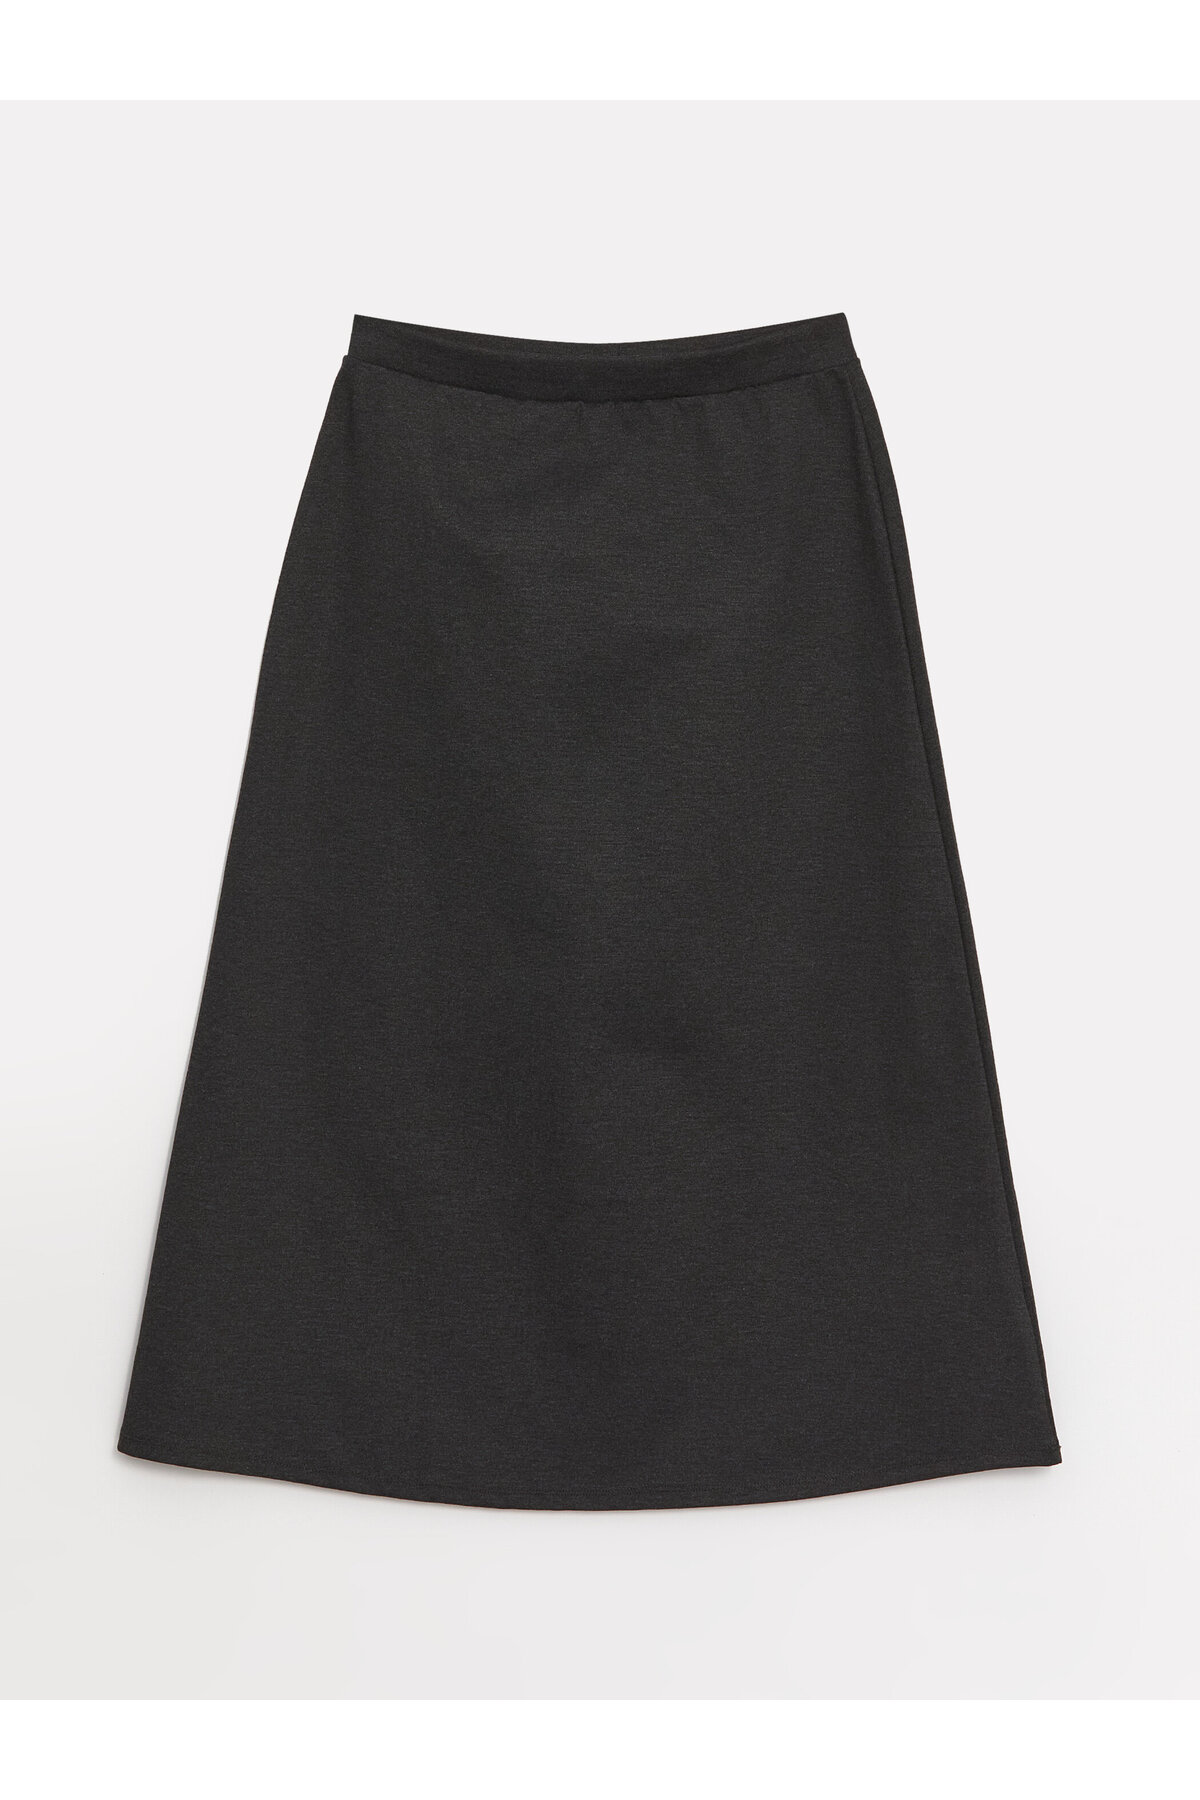 LC Waikiki Women's Elastic Waist Plain Skirt